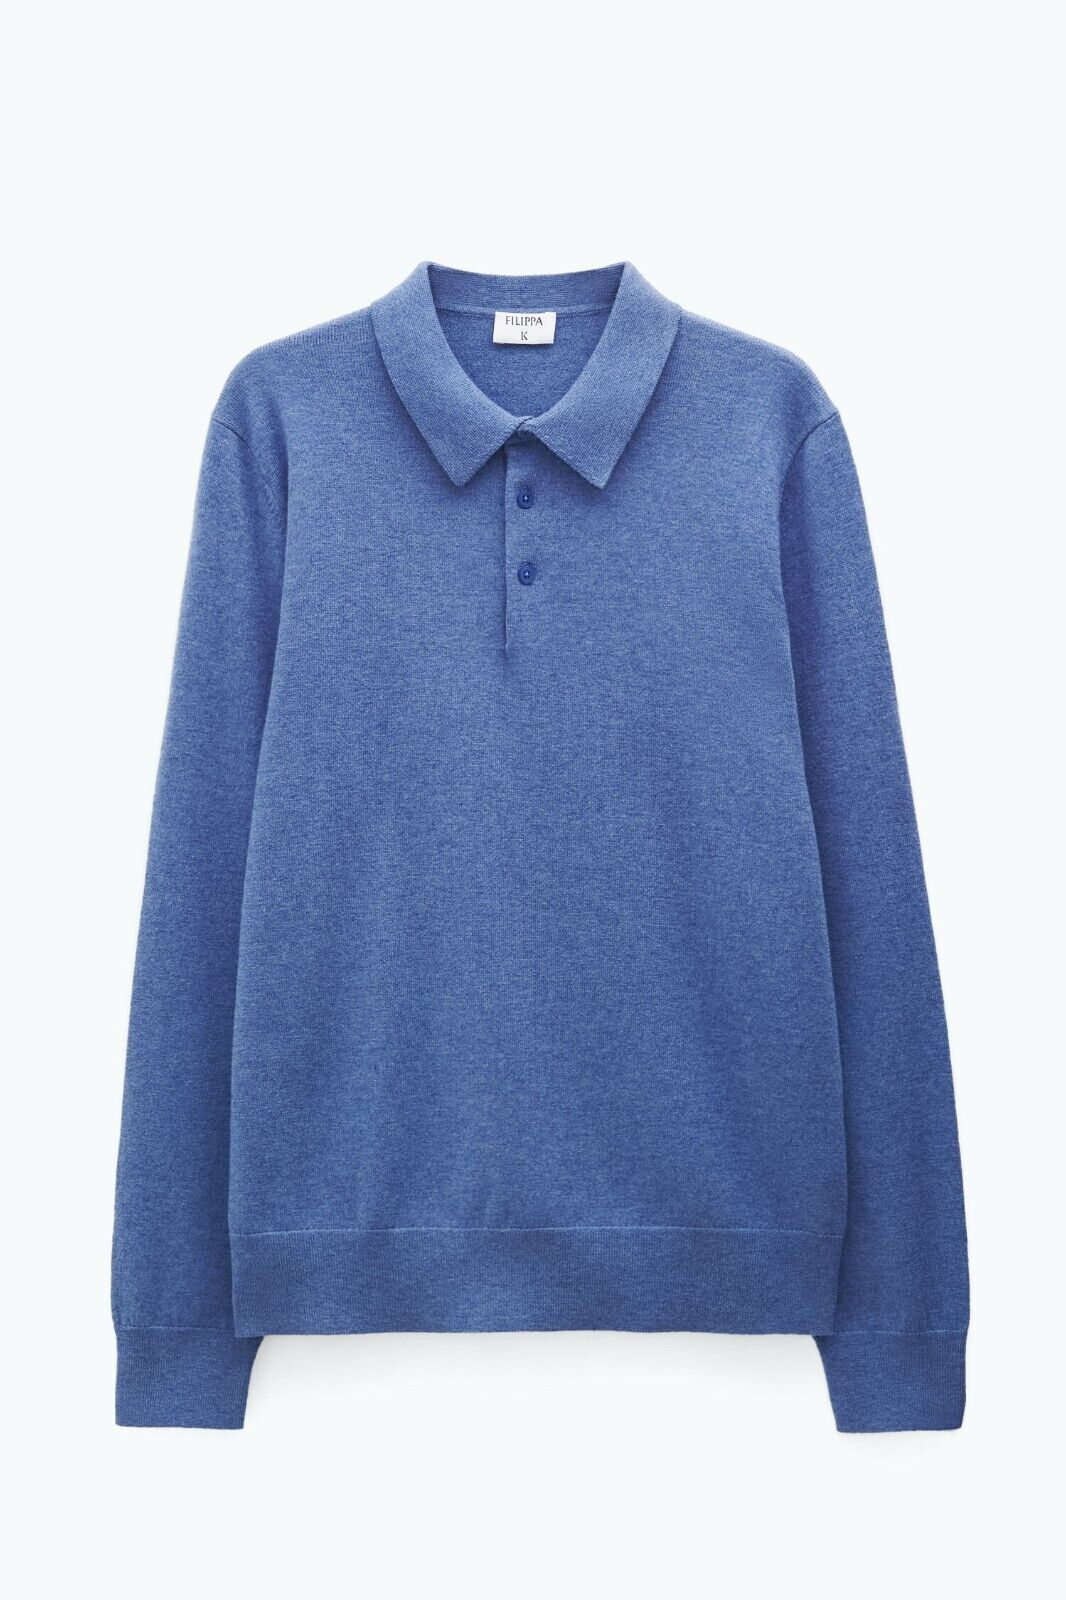 Filippa K - Knitted Polo Shirt - Paris Blue - Größe M